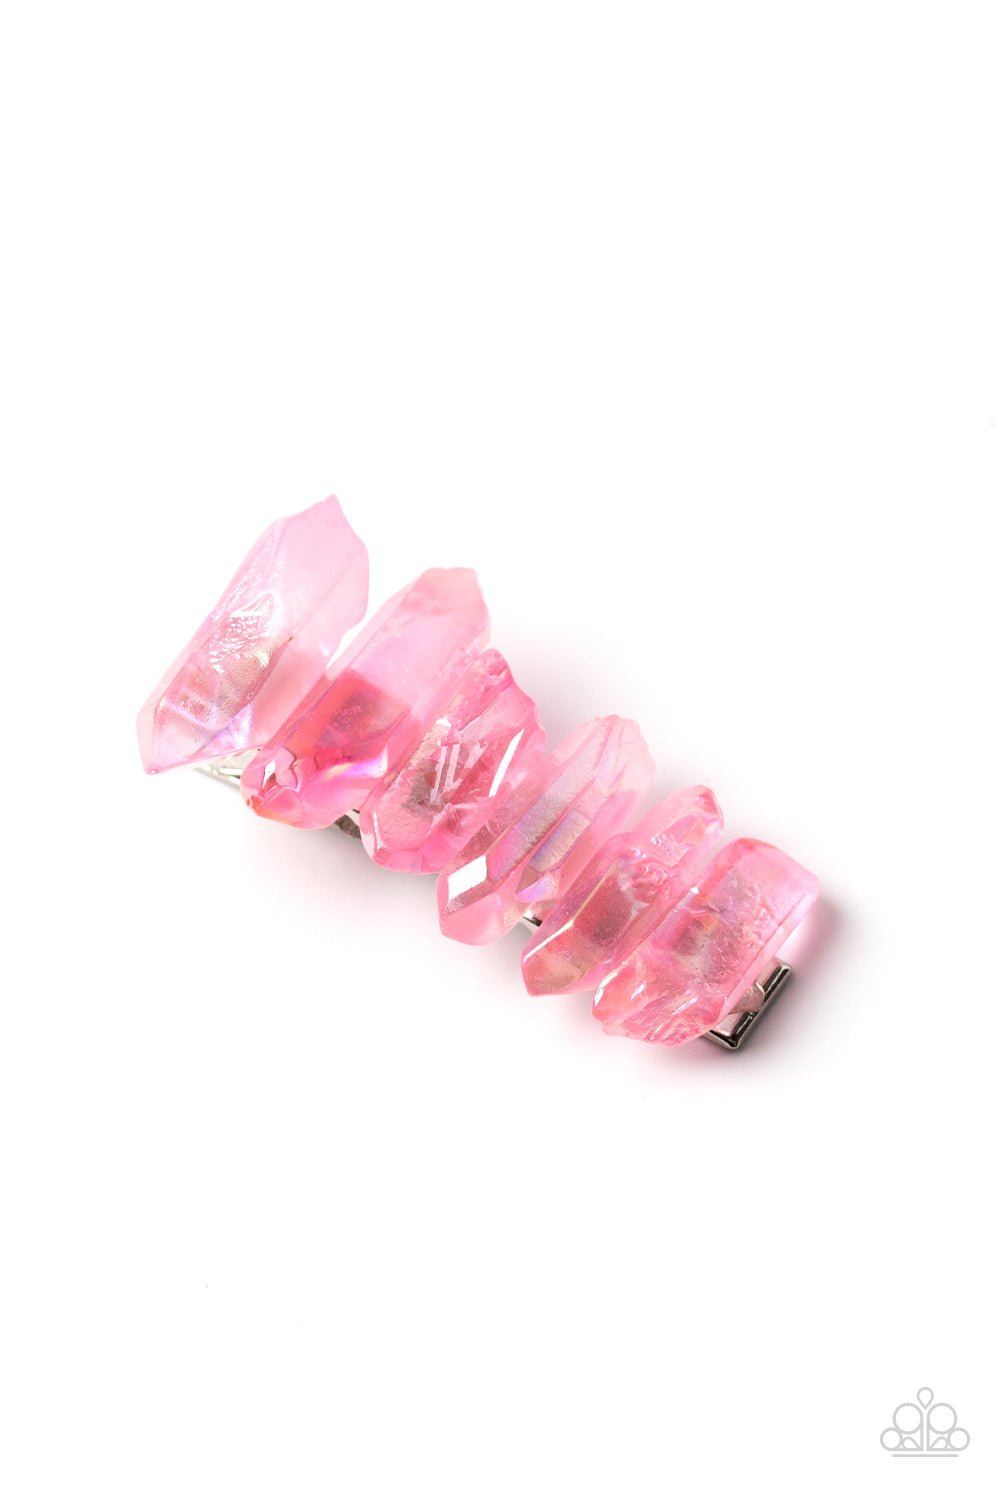 Crystal Caves - Pink - Paparazzi - Davetta Jewels